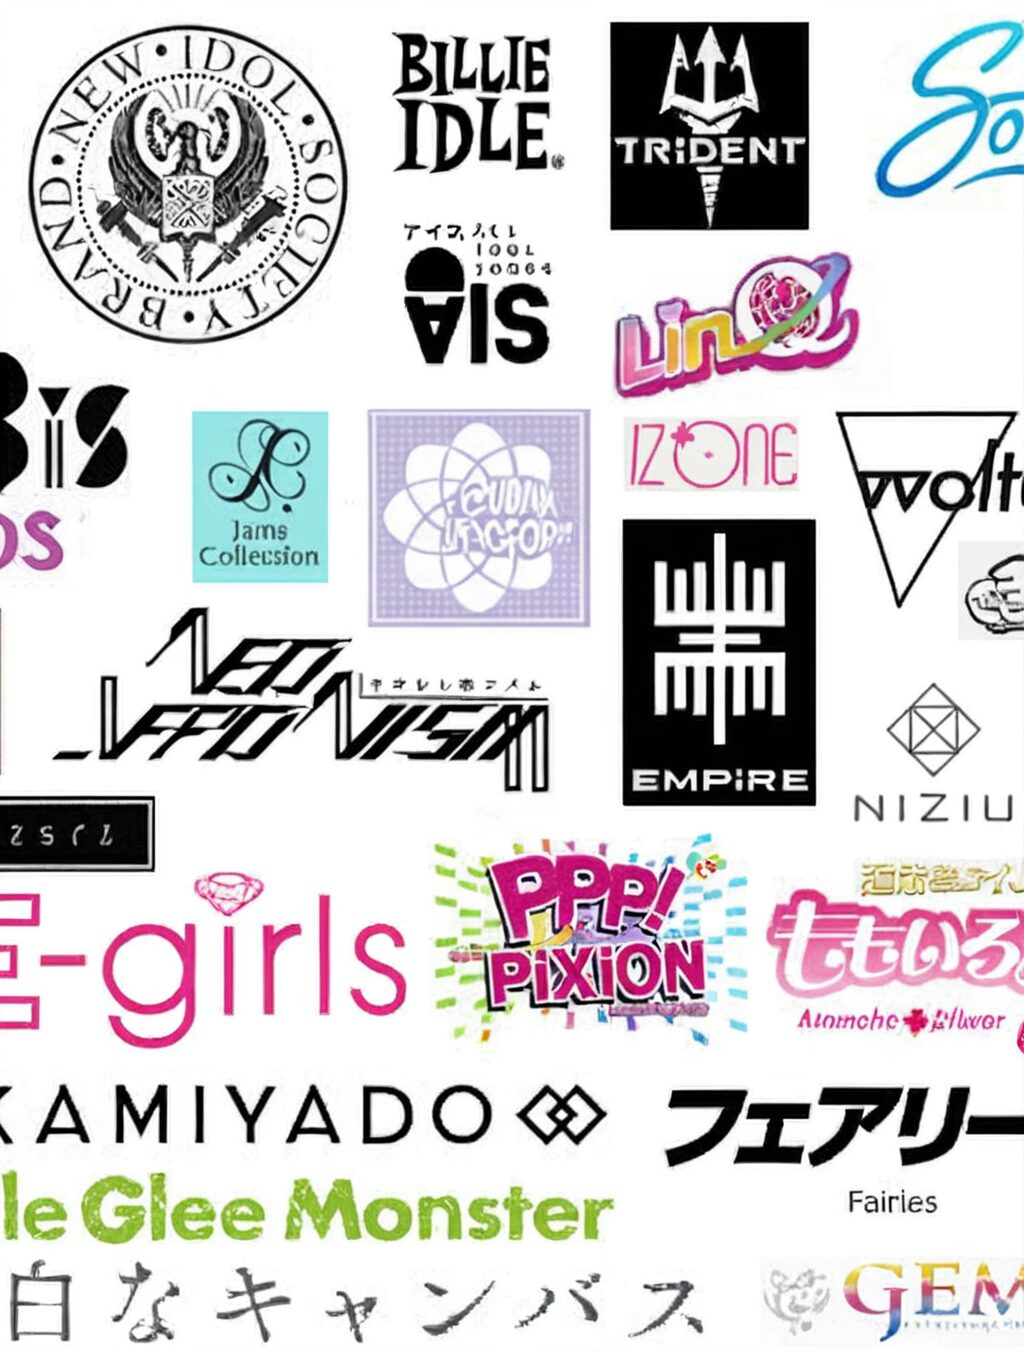 jpop idol group names